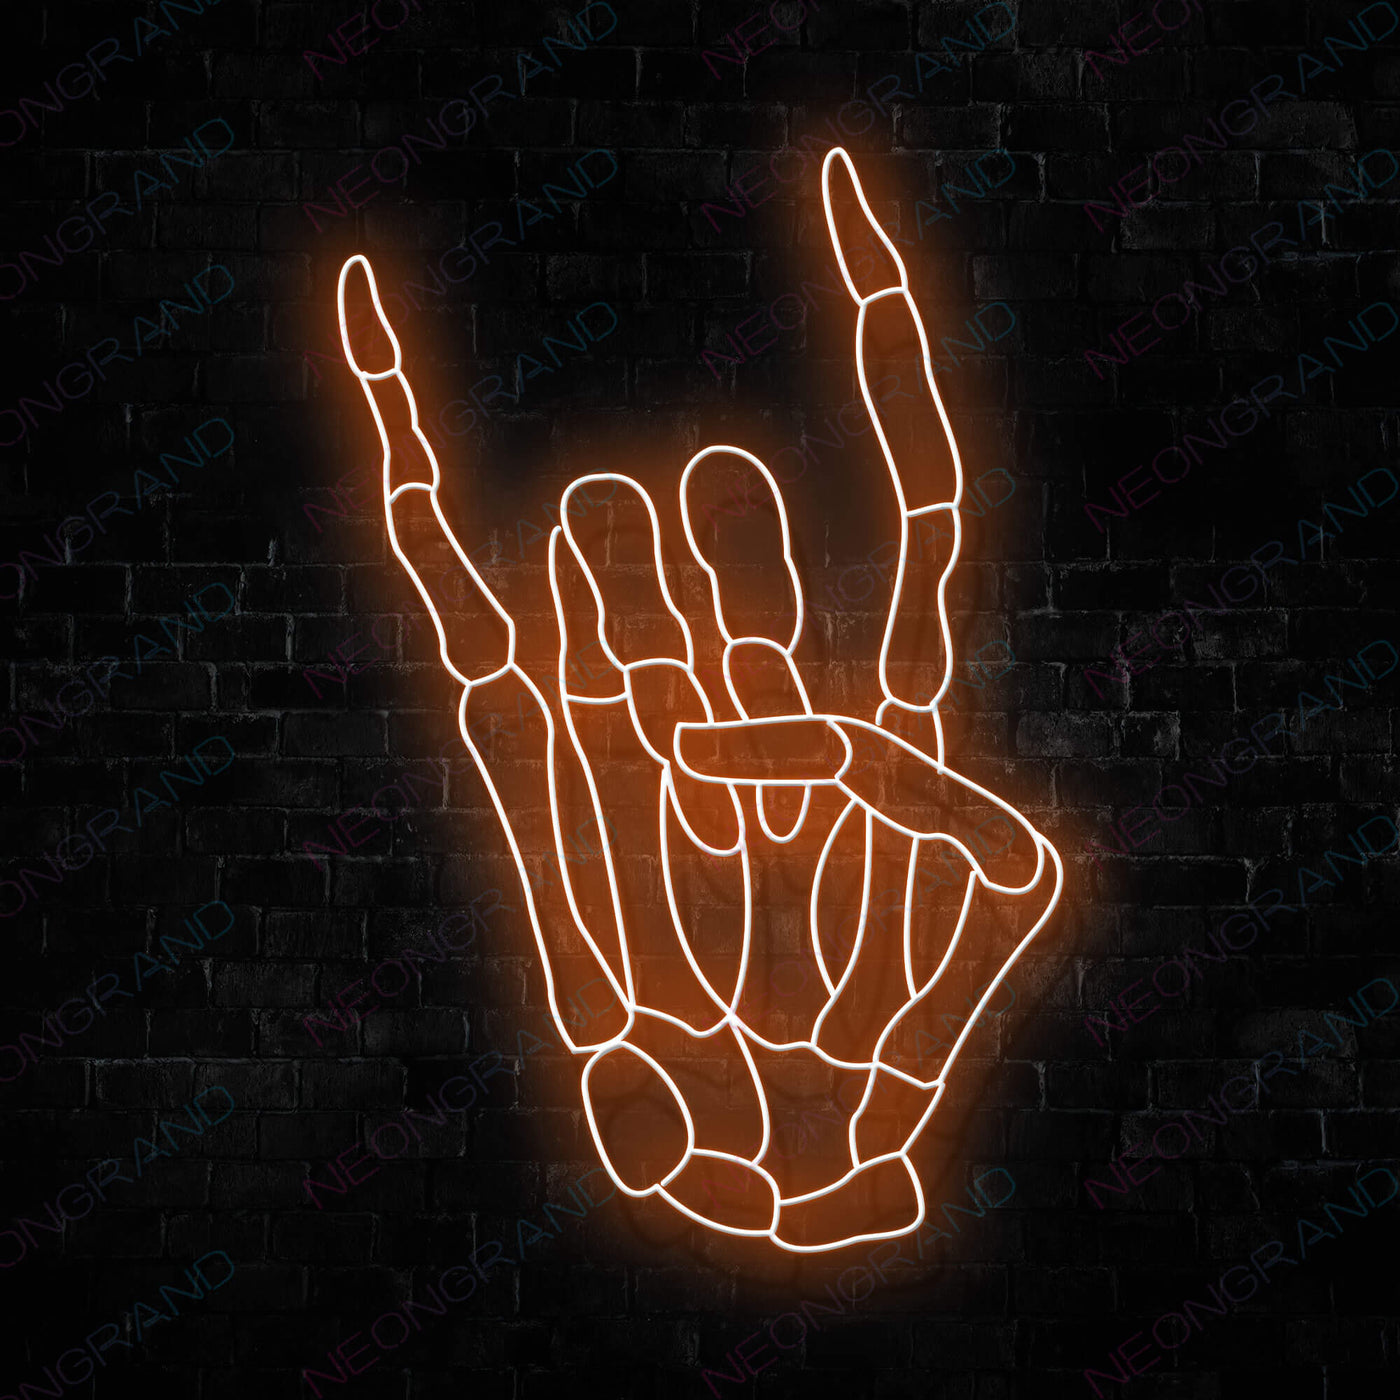 Rock N Roll Neon Sign Skeleton Hand Led Light orange